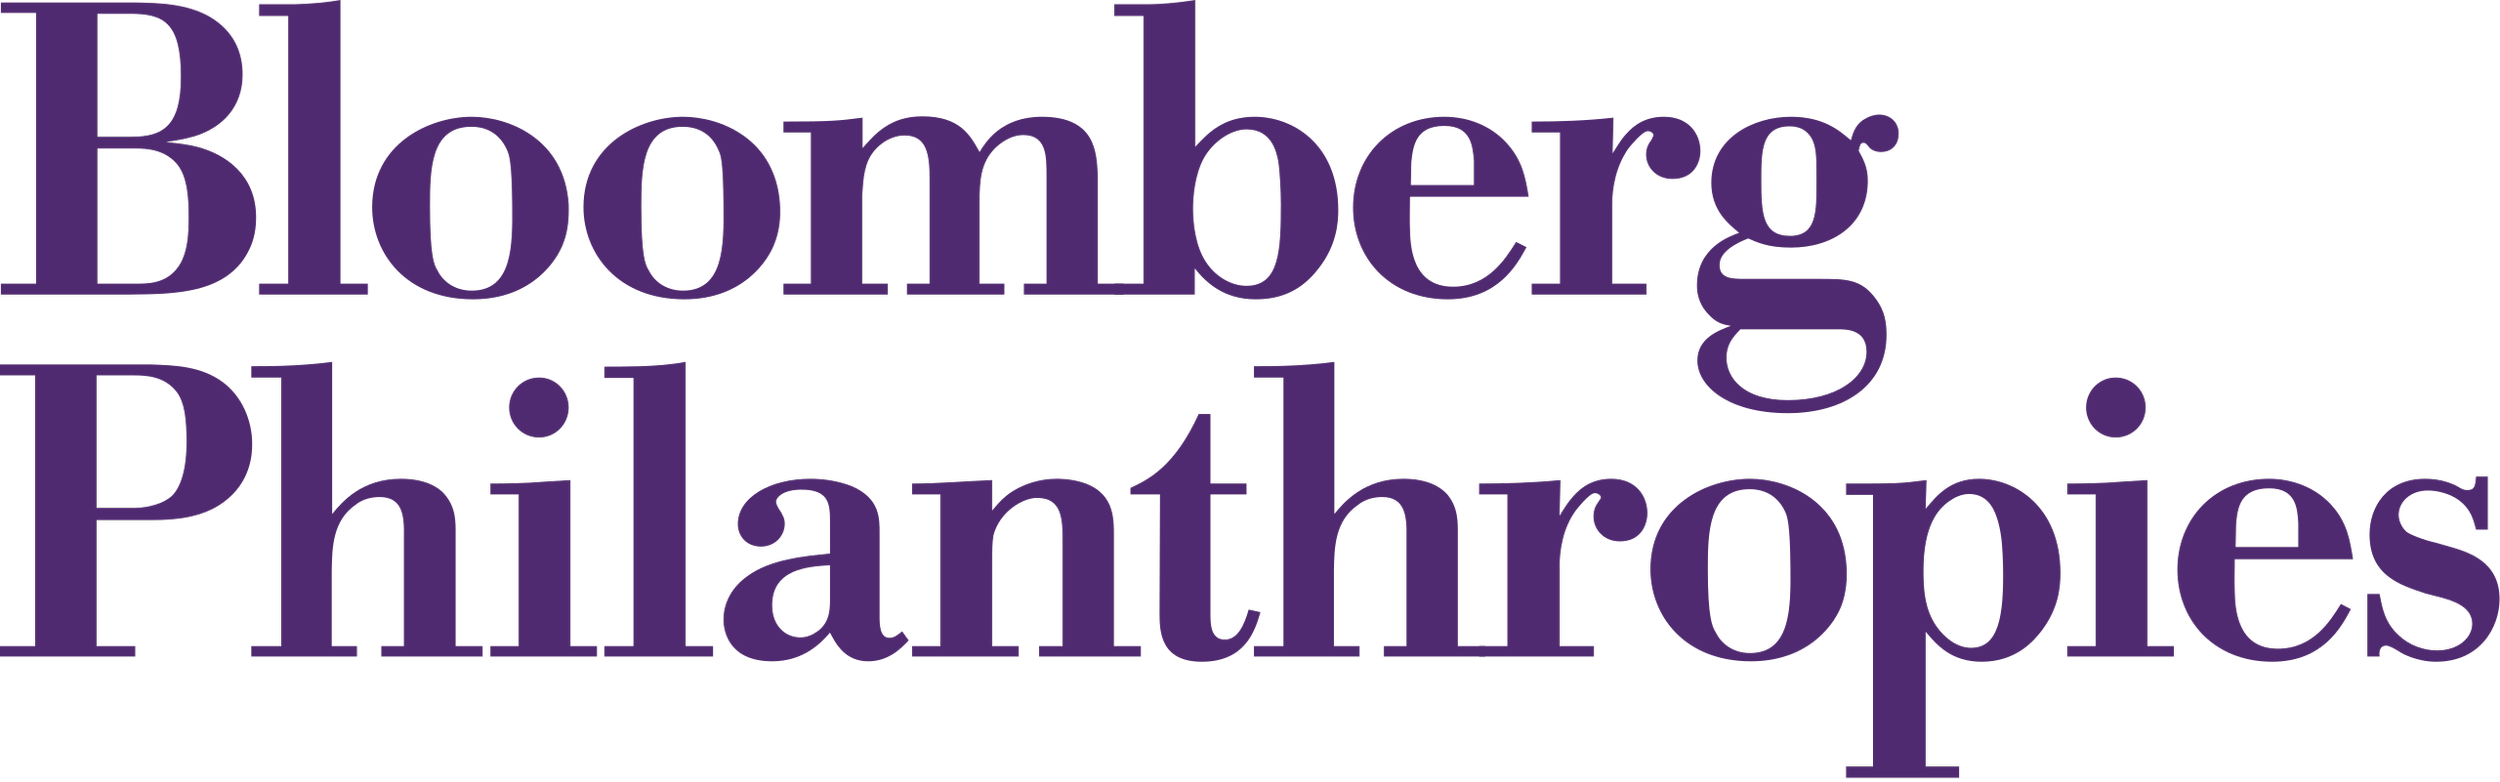 Bloomberg_Philanthropies_logo_purple_2019.svg.png